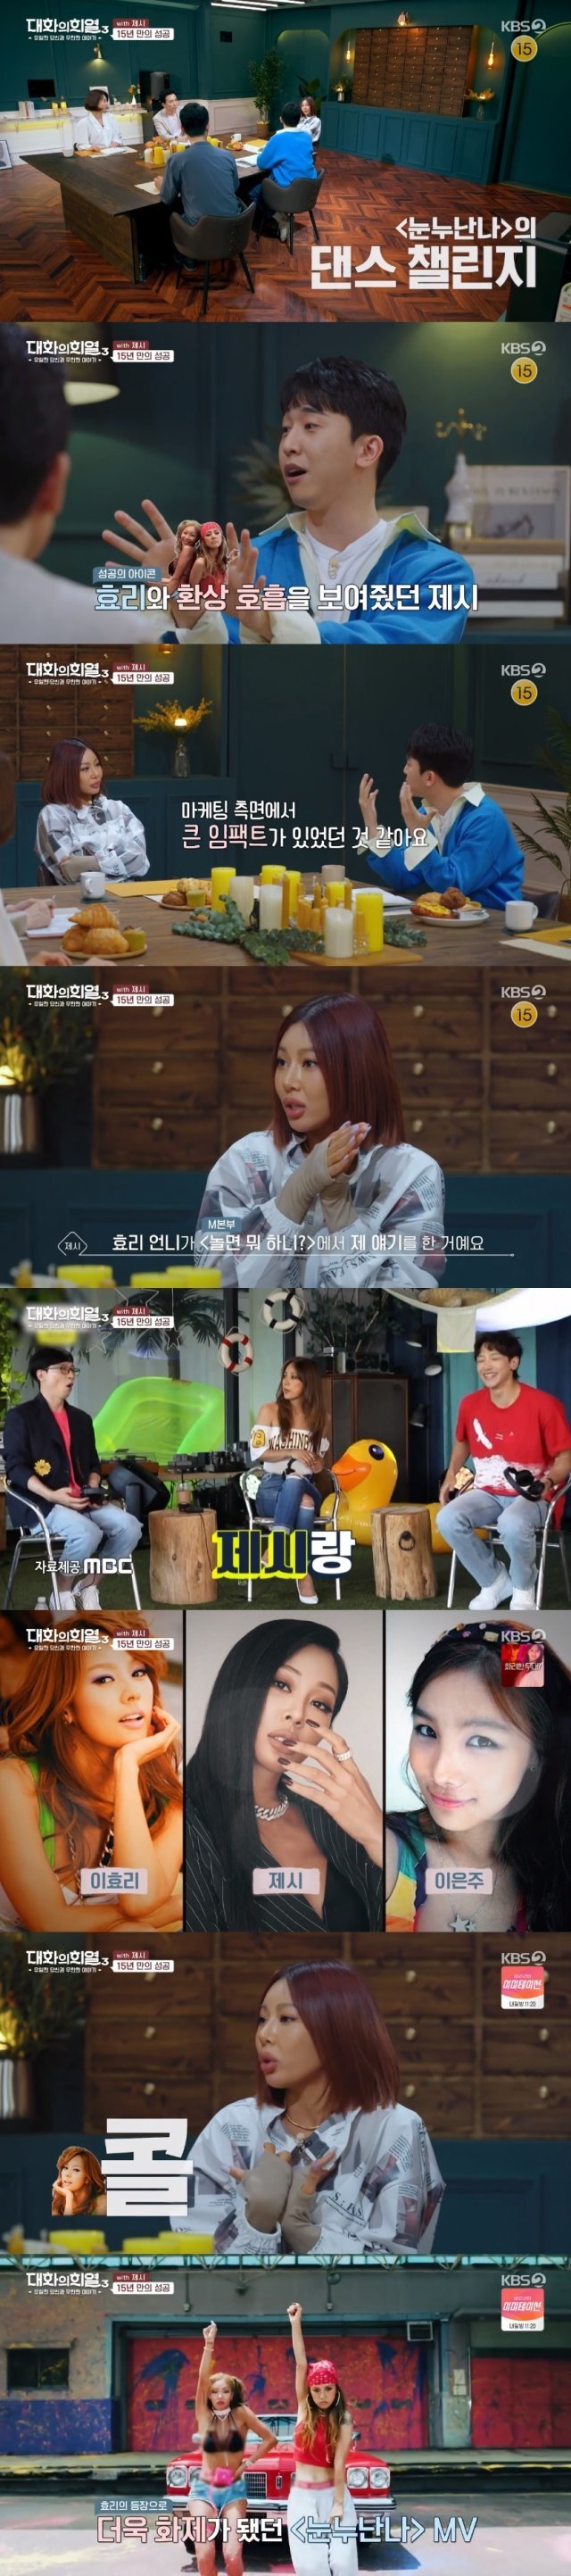 KBS 2TV ‘대화의 희열 3’ 캡처 © 뉴스1